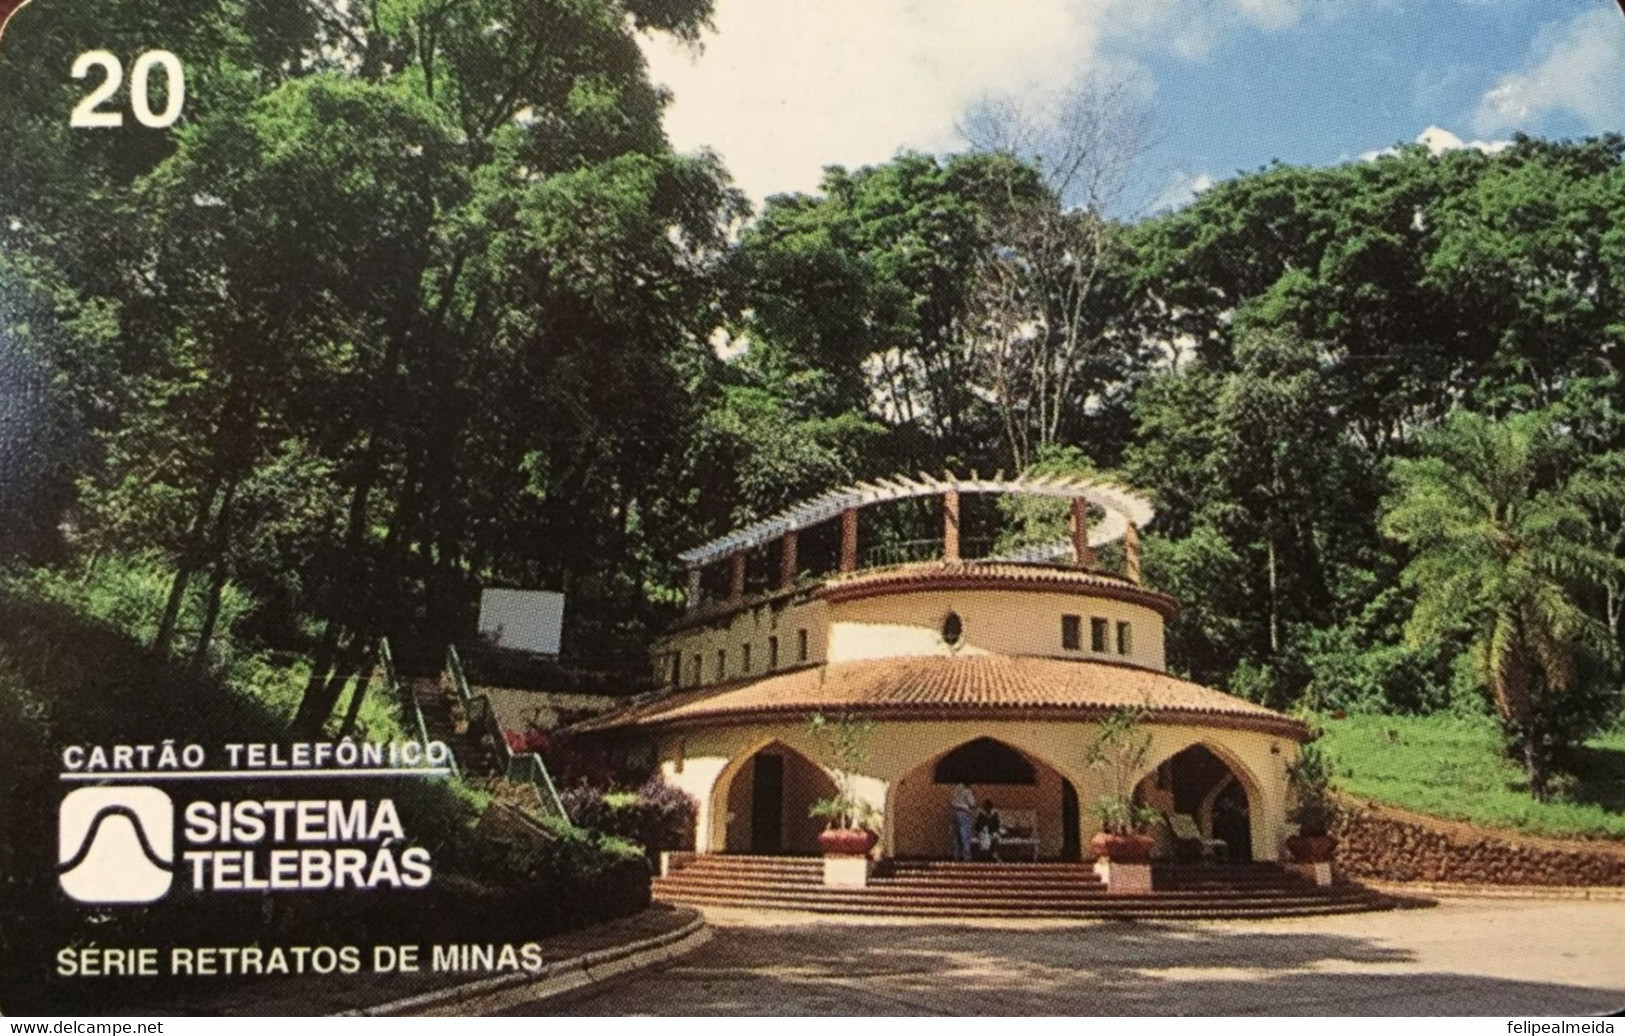 Rare Phone Card Produced By Telebras In 1998 - Series Retratos De Minas - Image Fonte Do Beja In Araxá - Minas Gerais - - Cultural